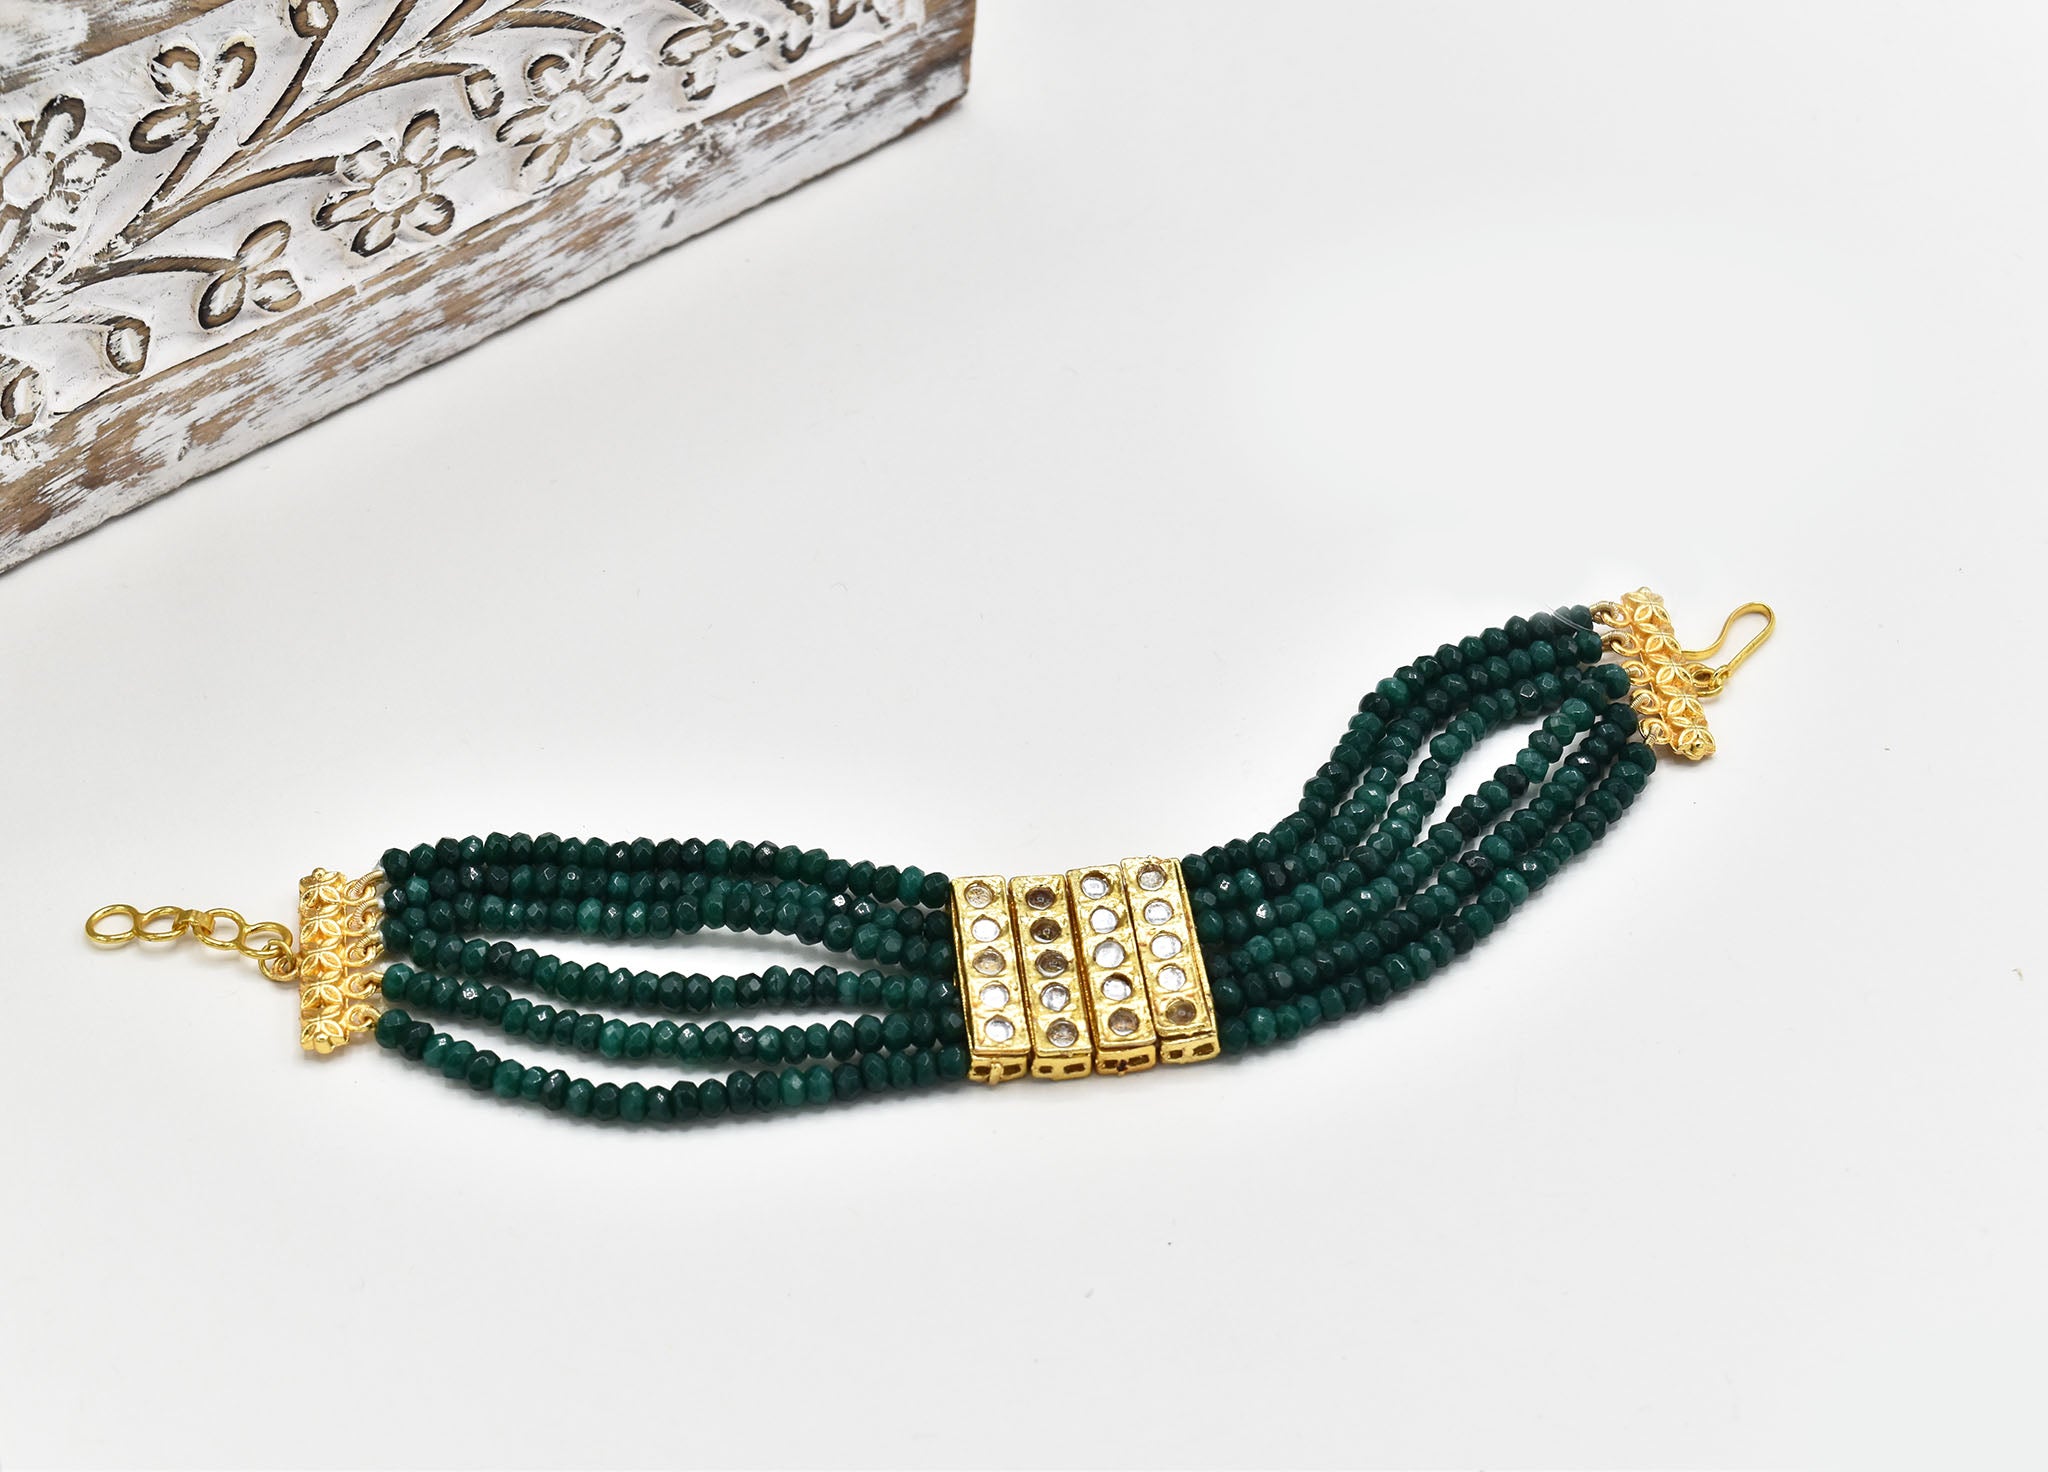 Pin by Anjali Kale on terracotta | Clay jewelry, Jewelry, Mens bracelet